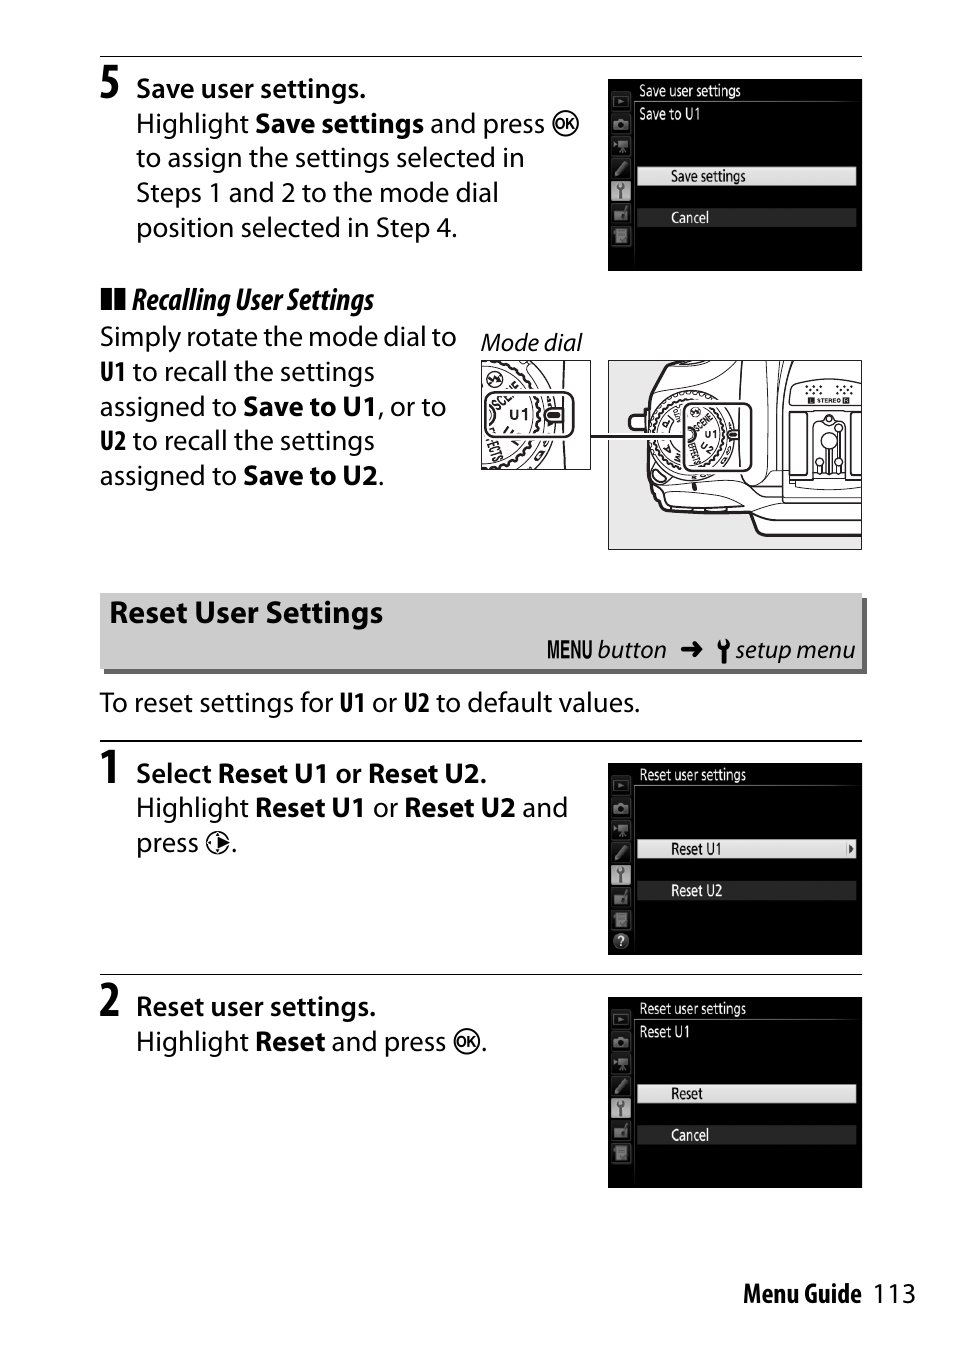 Reset user settings | Nikon D7200 body User Manual | Page 113 / 202